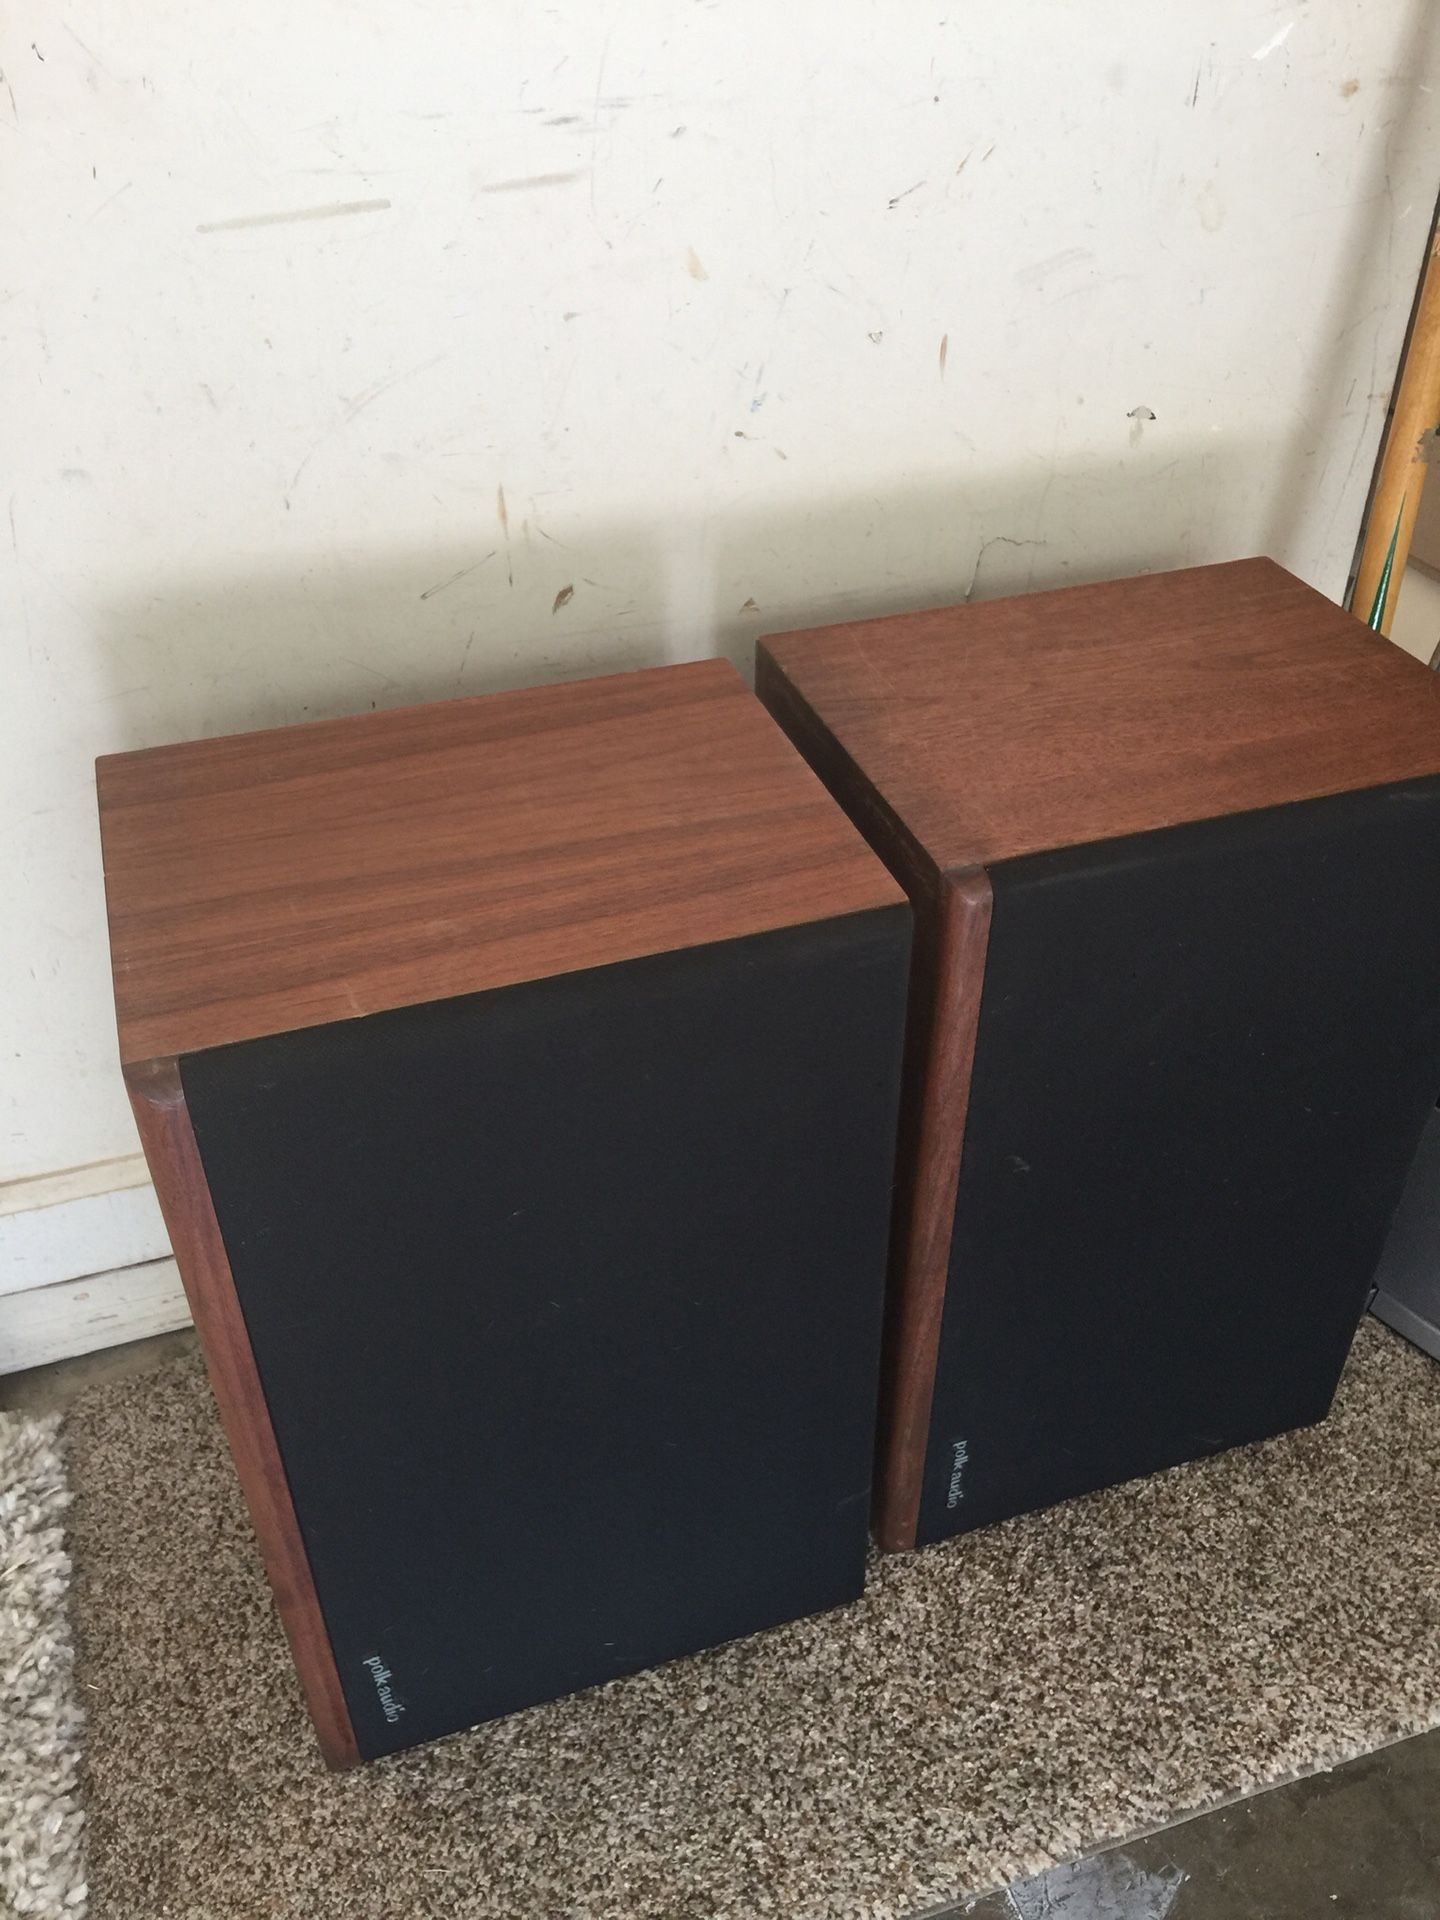 Polk Audio Speakers Vintage Nice Condition